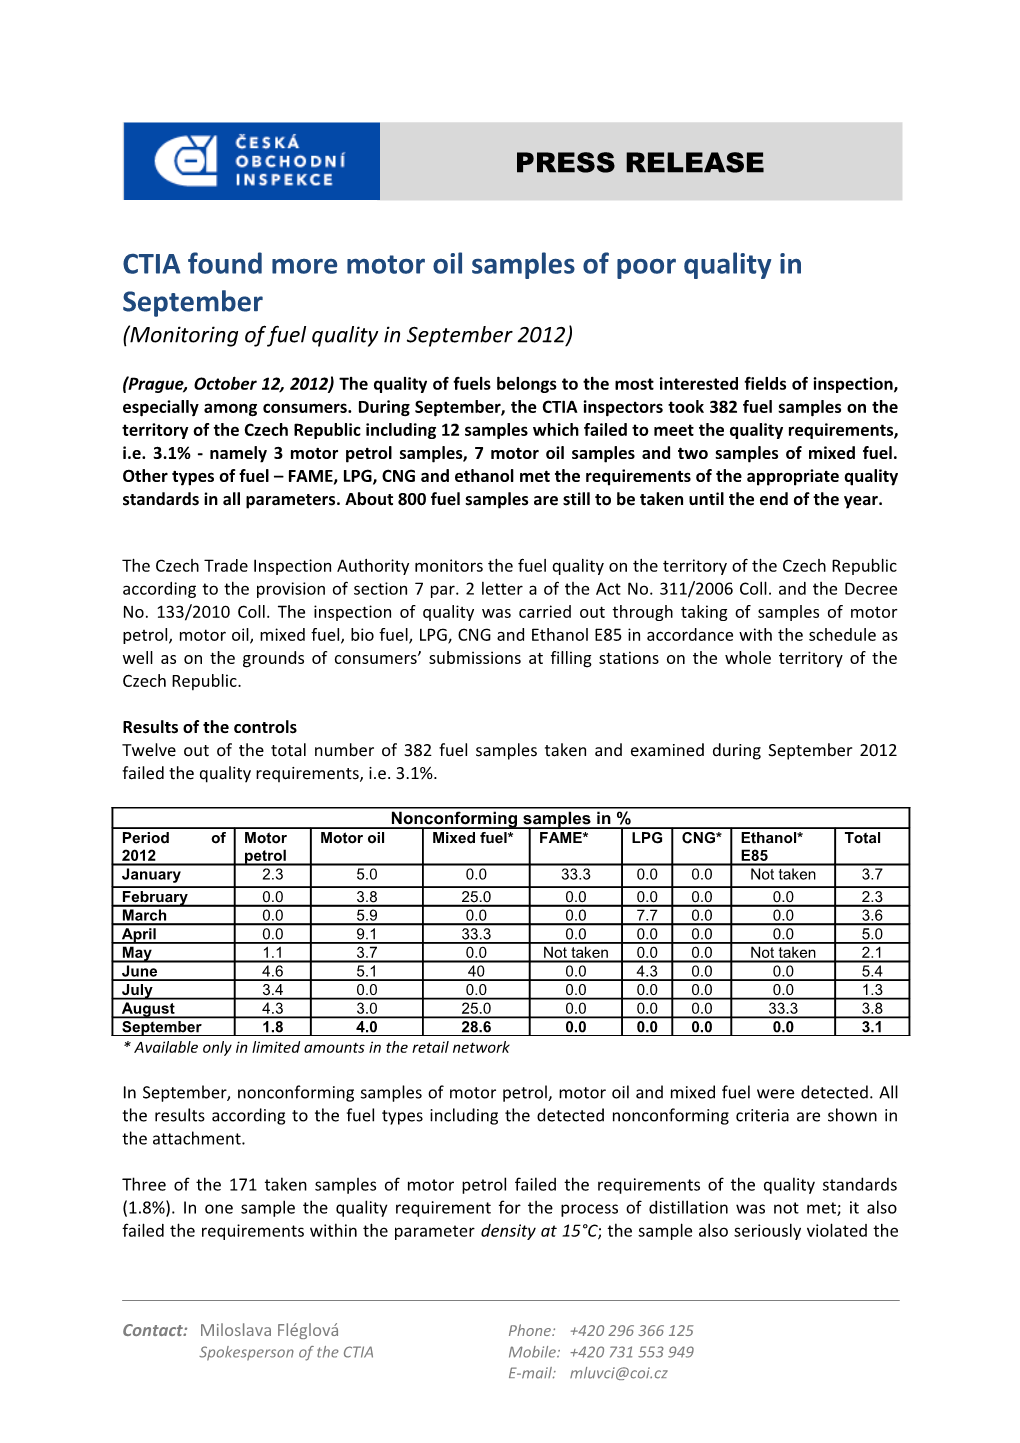 CTIA Found More Motor Oil Samples of Poor Quality in September